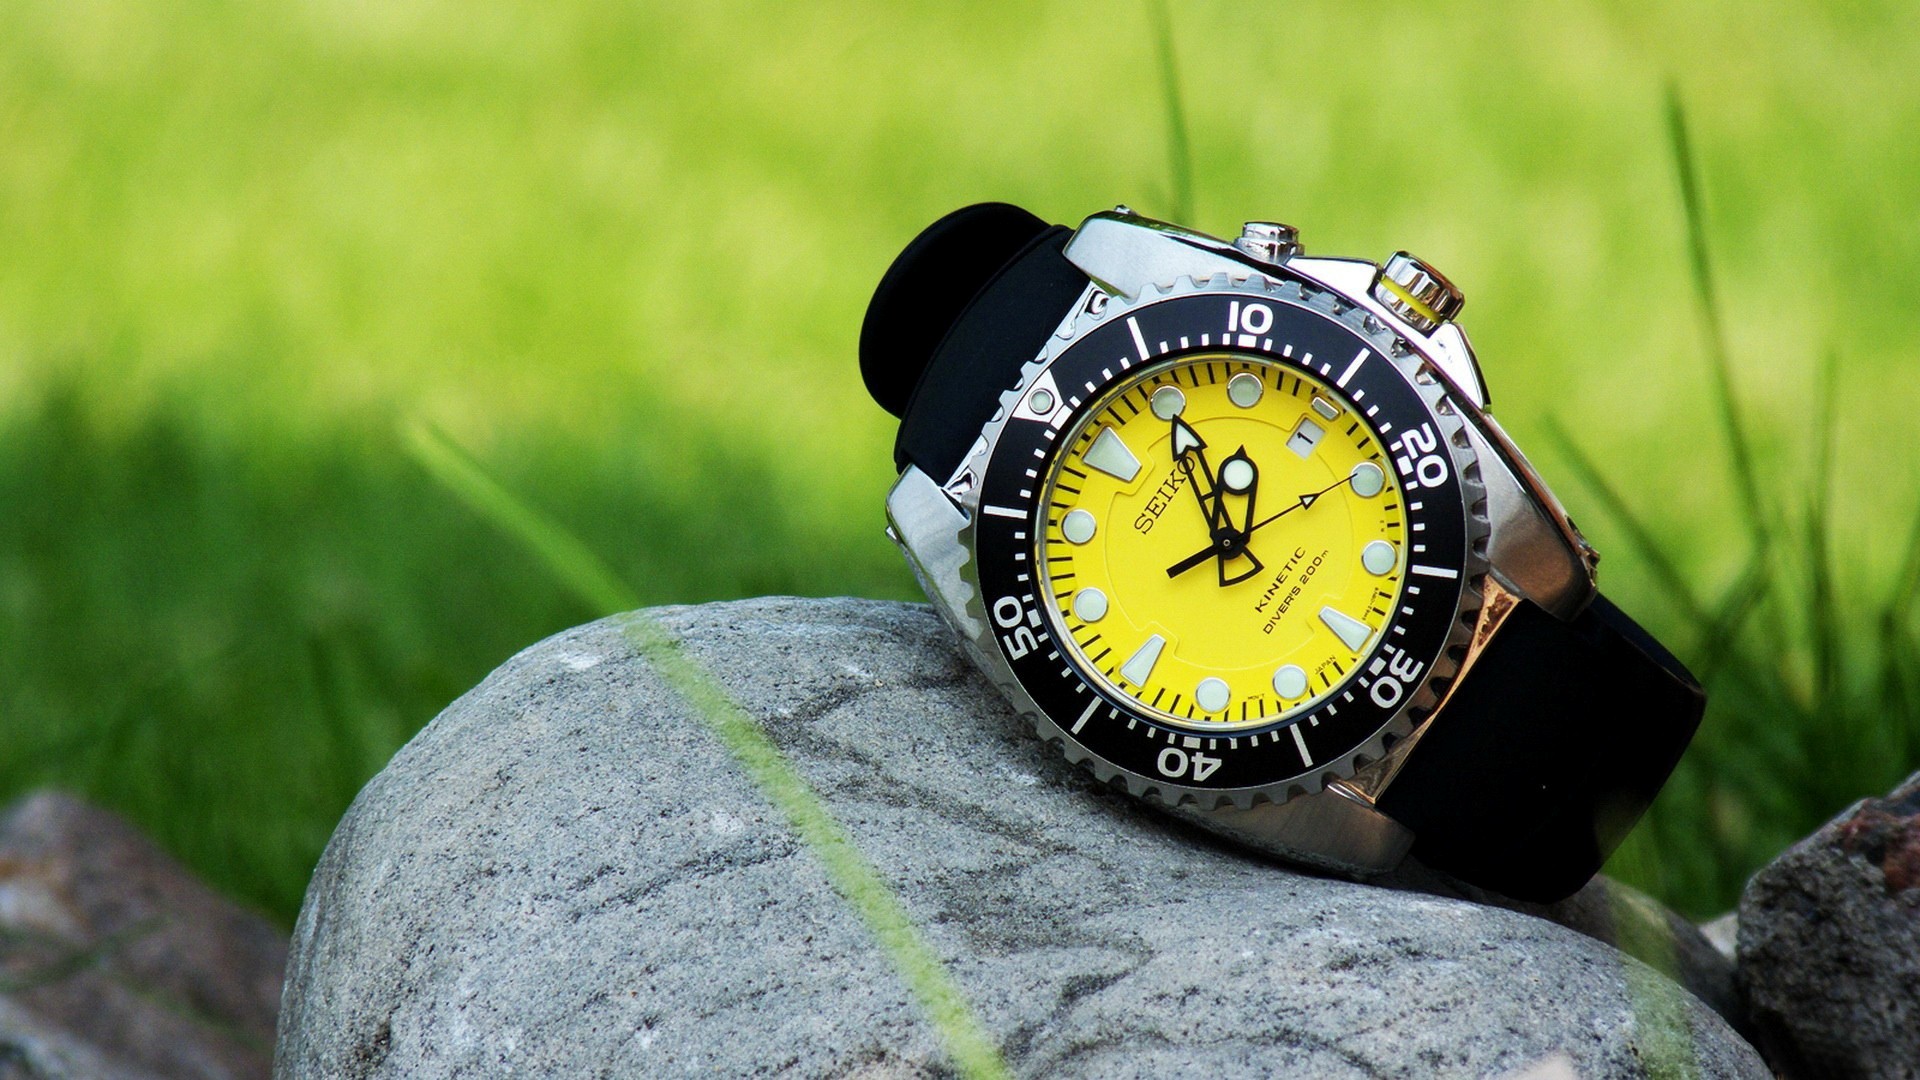 watch wallpaper,analog watch,watch,fashion accessory,watch accessory,grass